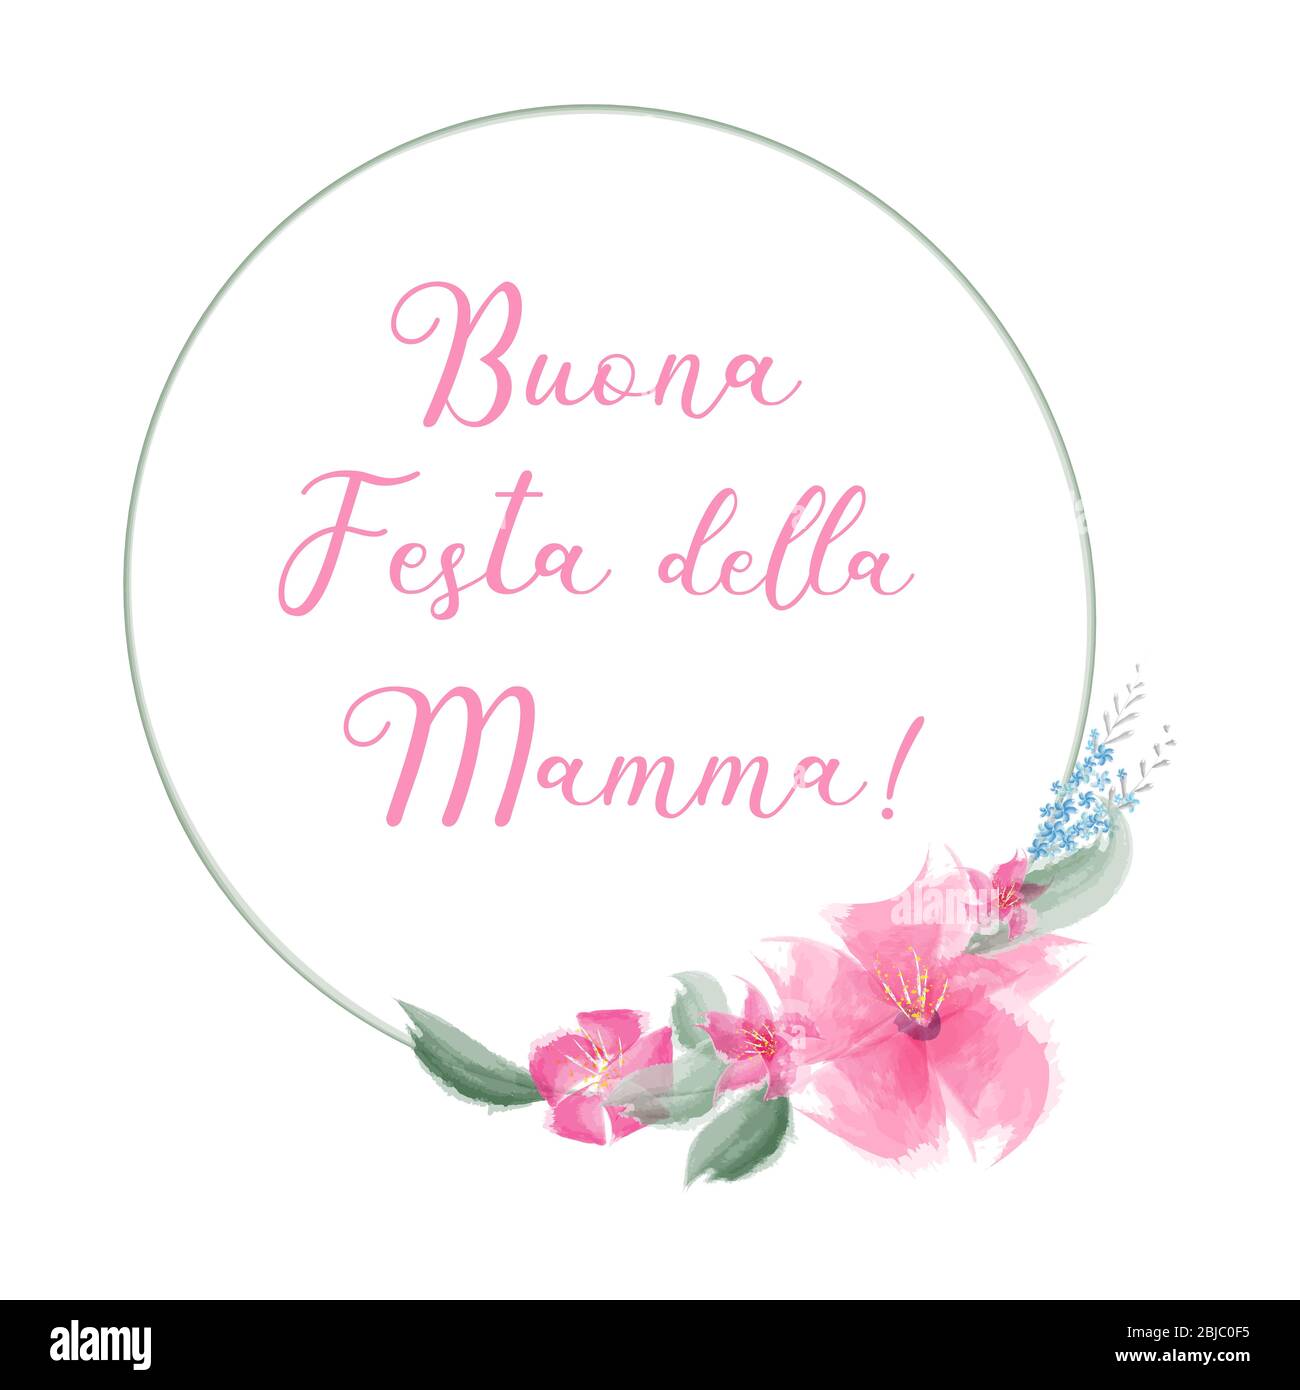 Buona festa della mamma hi-res stock photography and images - Alamy